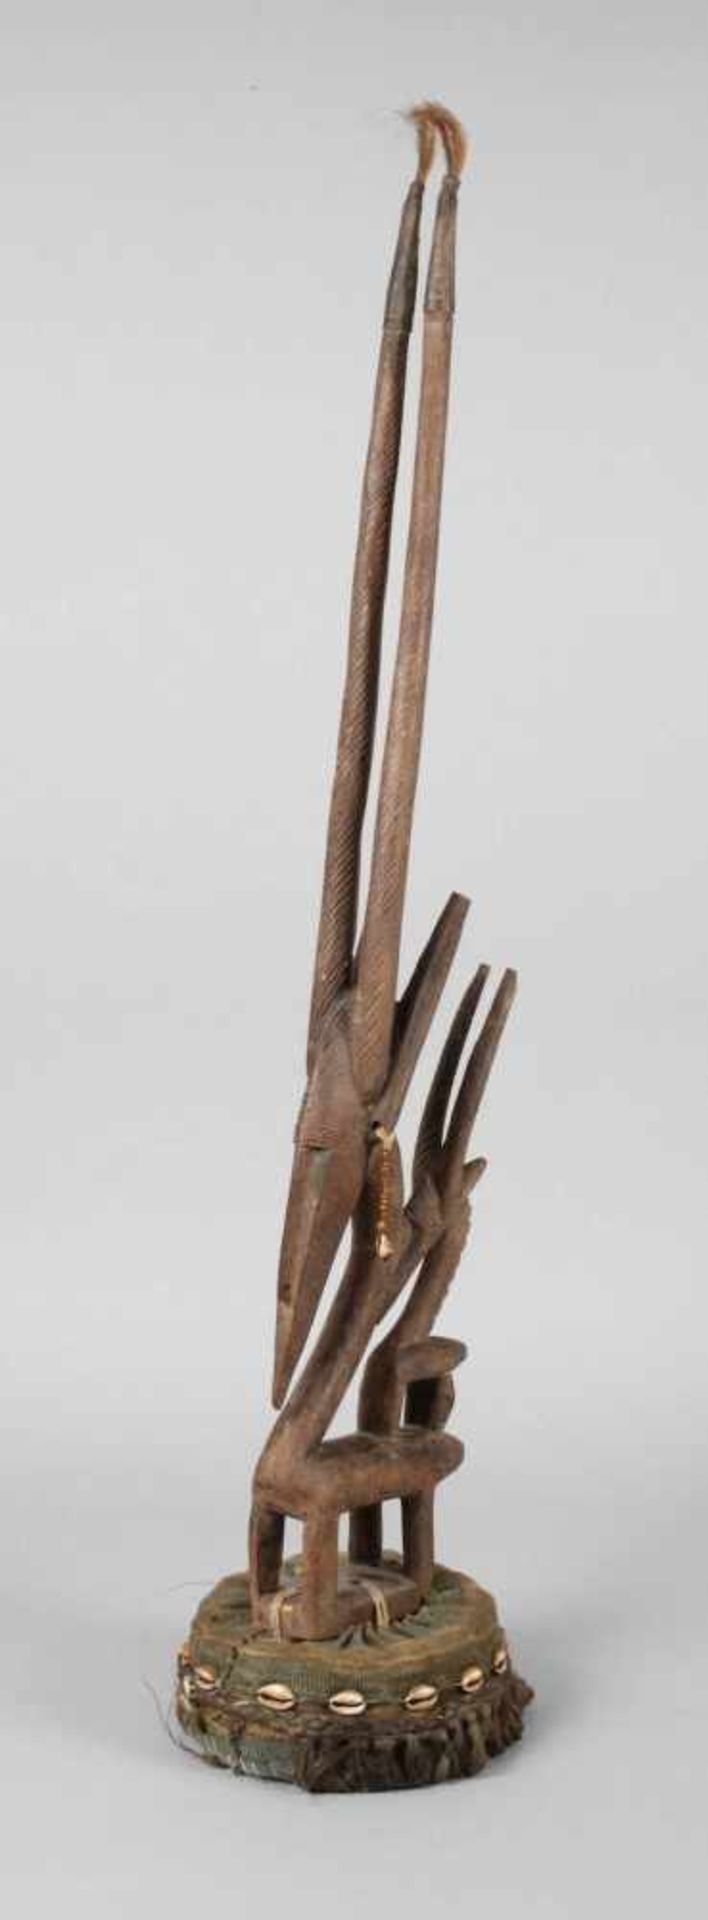 Antilopen-TanzaufsatzMali, 20. Jh., der Volksgruppe der Bambara zugeordnet, Holz fein beschnitzt, in